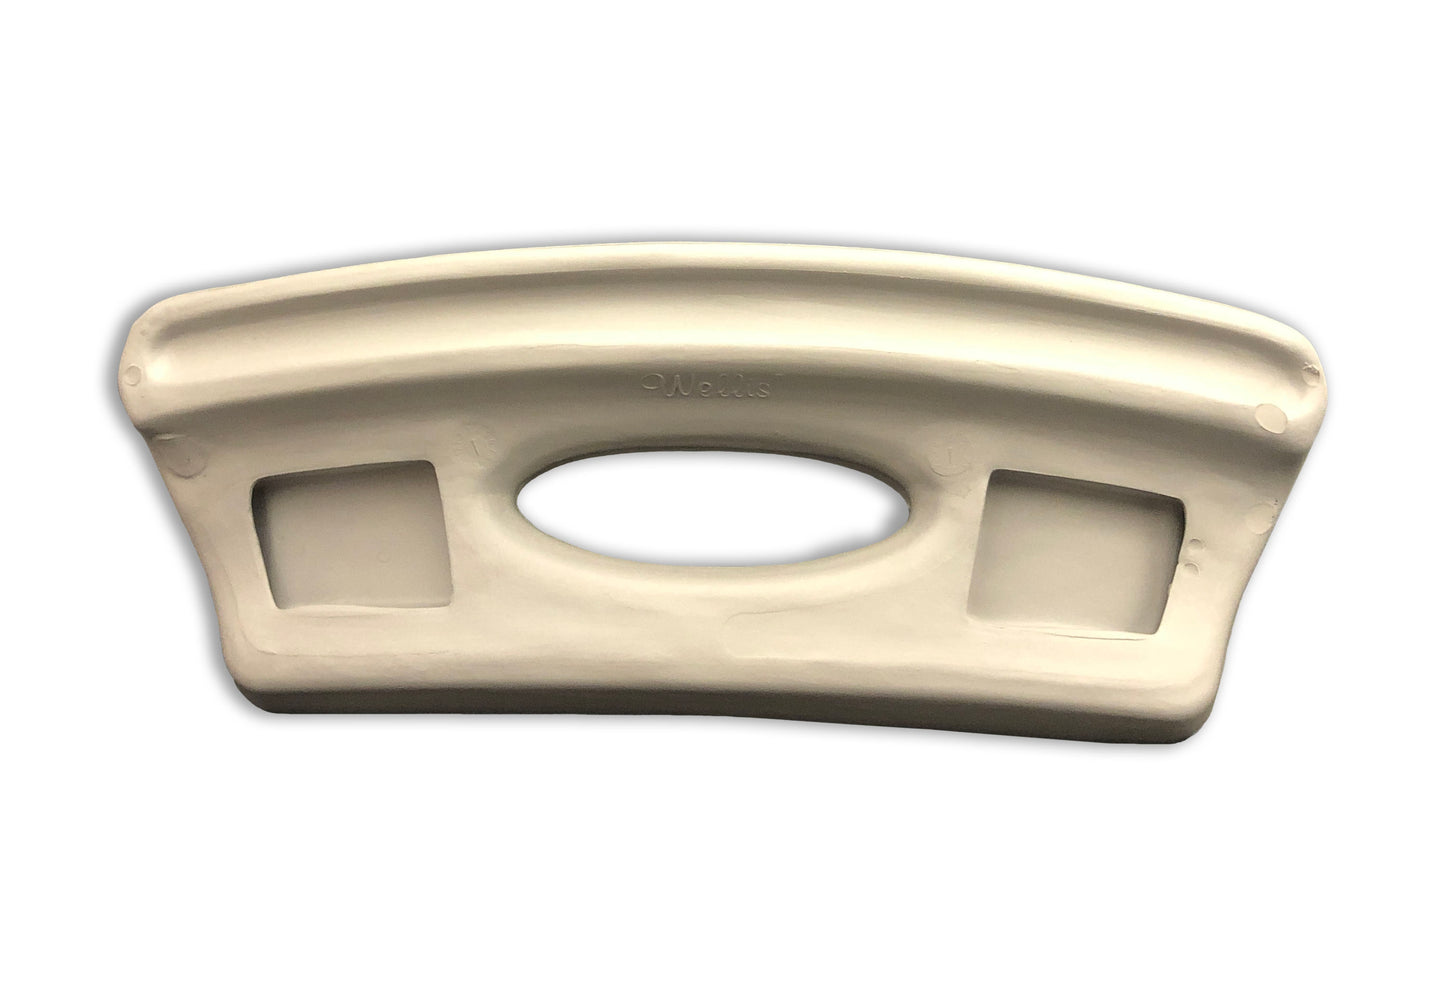 Wellis Headrest Pillow - 420 × 170 × 80 -  Version 2 light grey AF00043